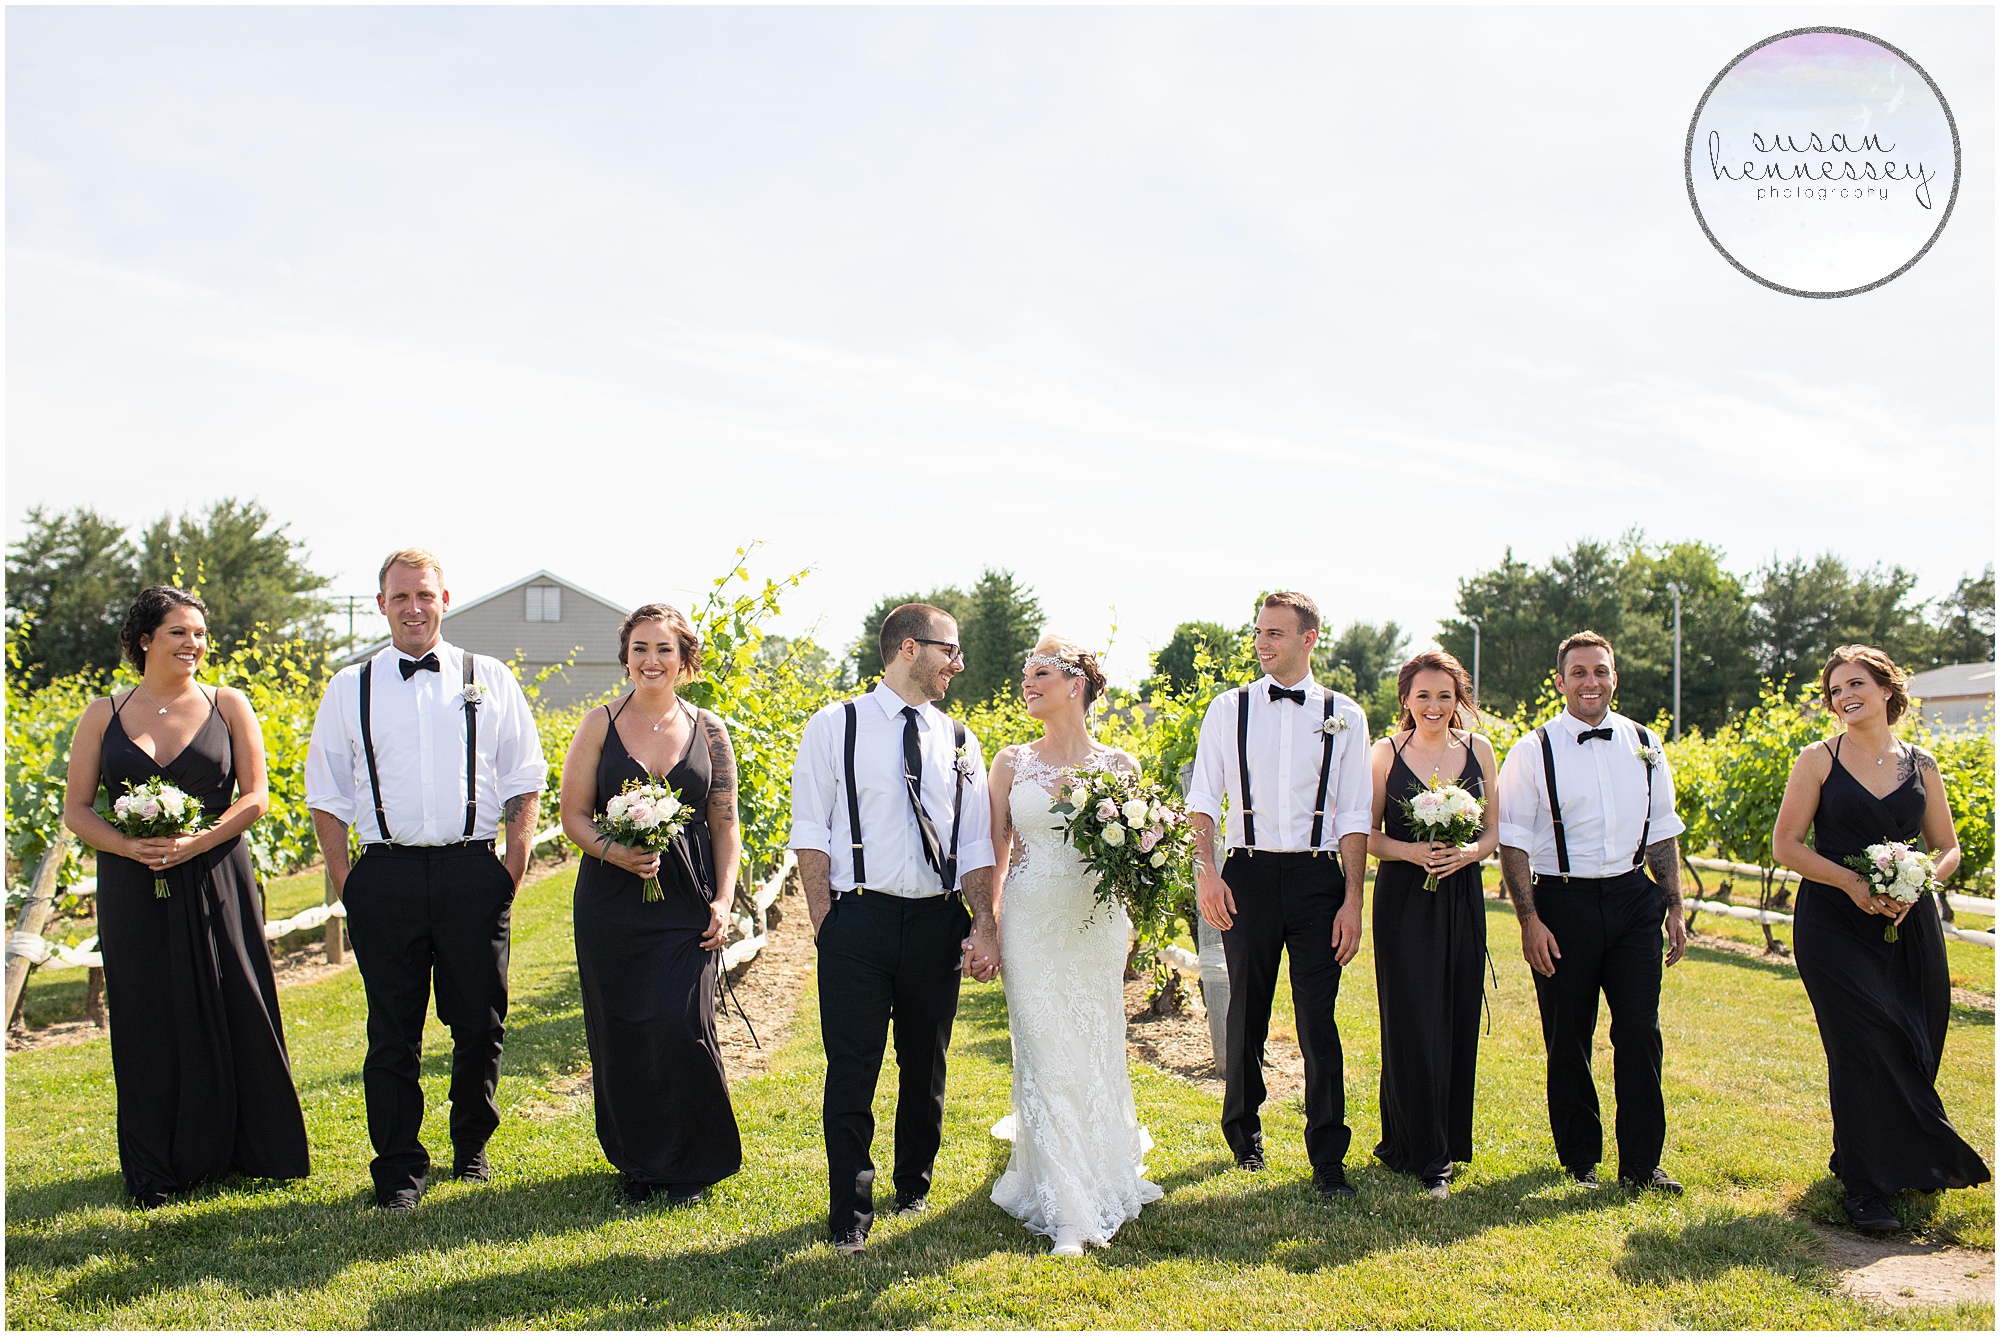 Bridal party in black at vineyard wedding.